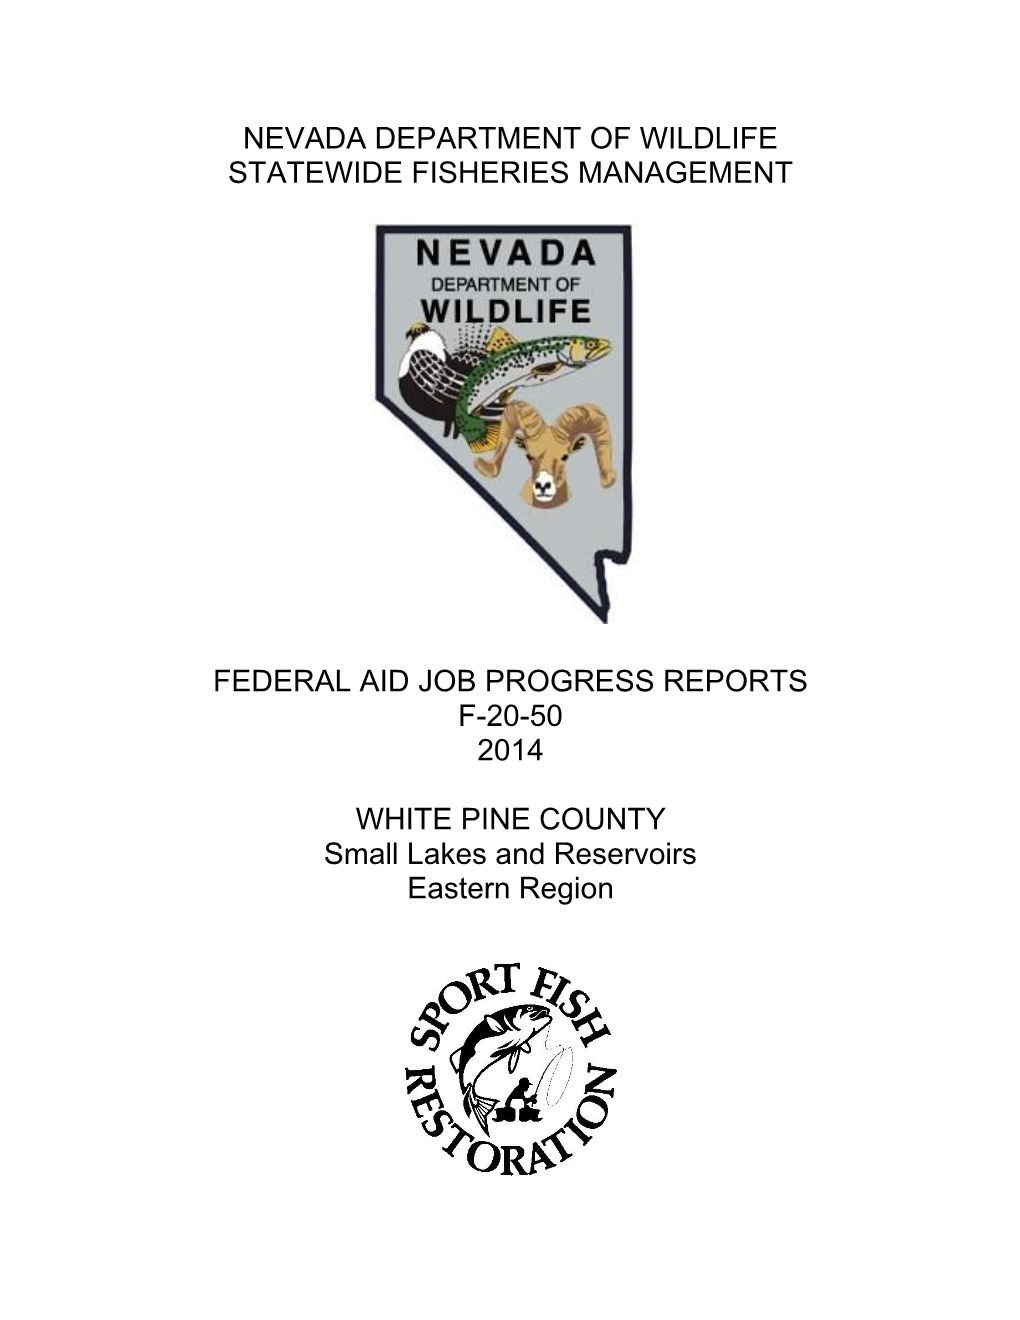 Nevada Department of Wildlife Statewide Fisheries Management